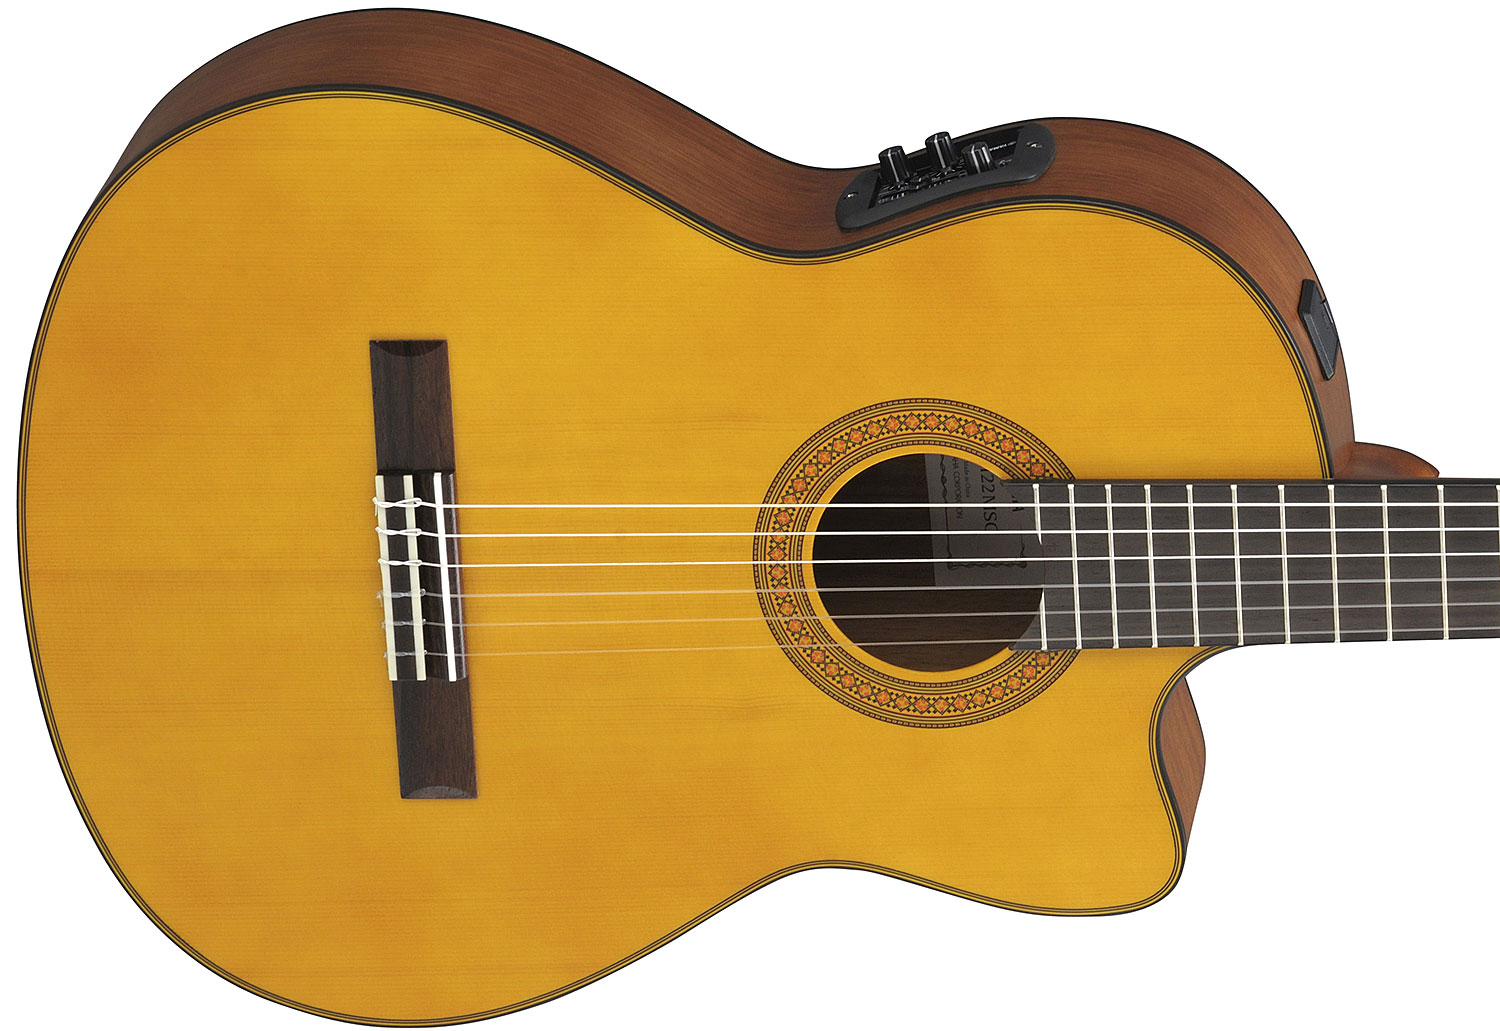 Yamaha Cgx122msc Spruce Top 4.4 Cw System 61 - Natural Matt - Classical guitar 4/4 size - Variation 3